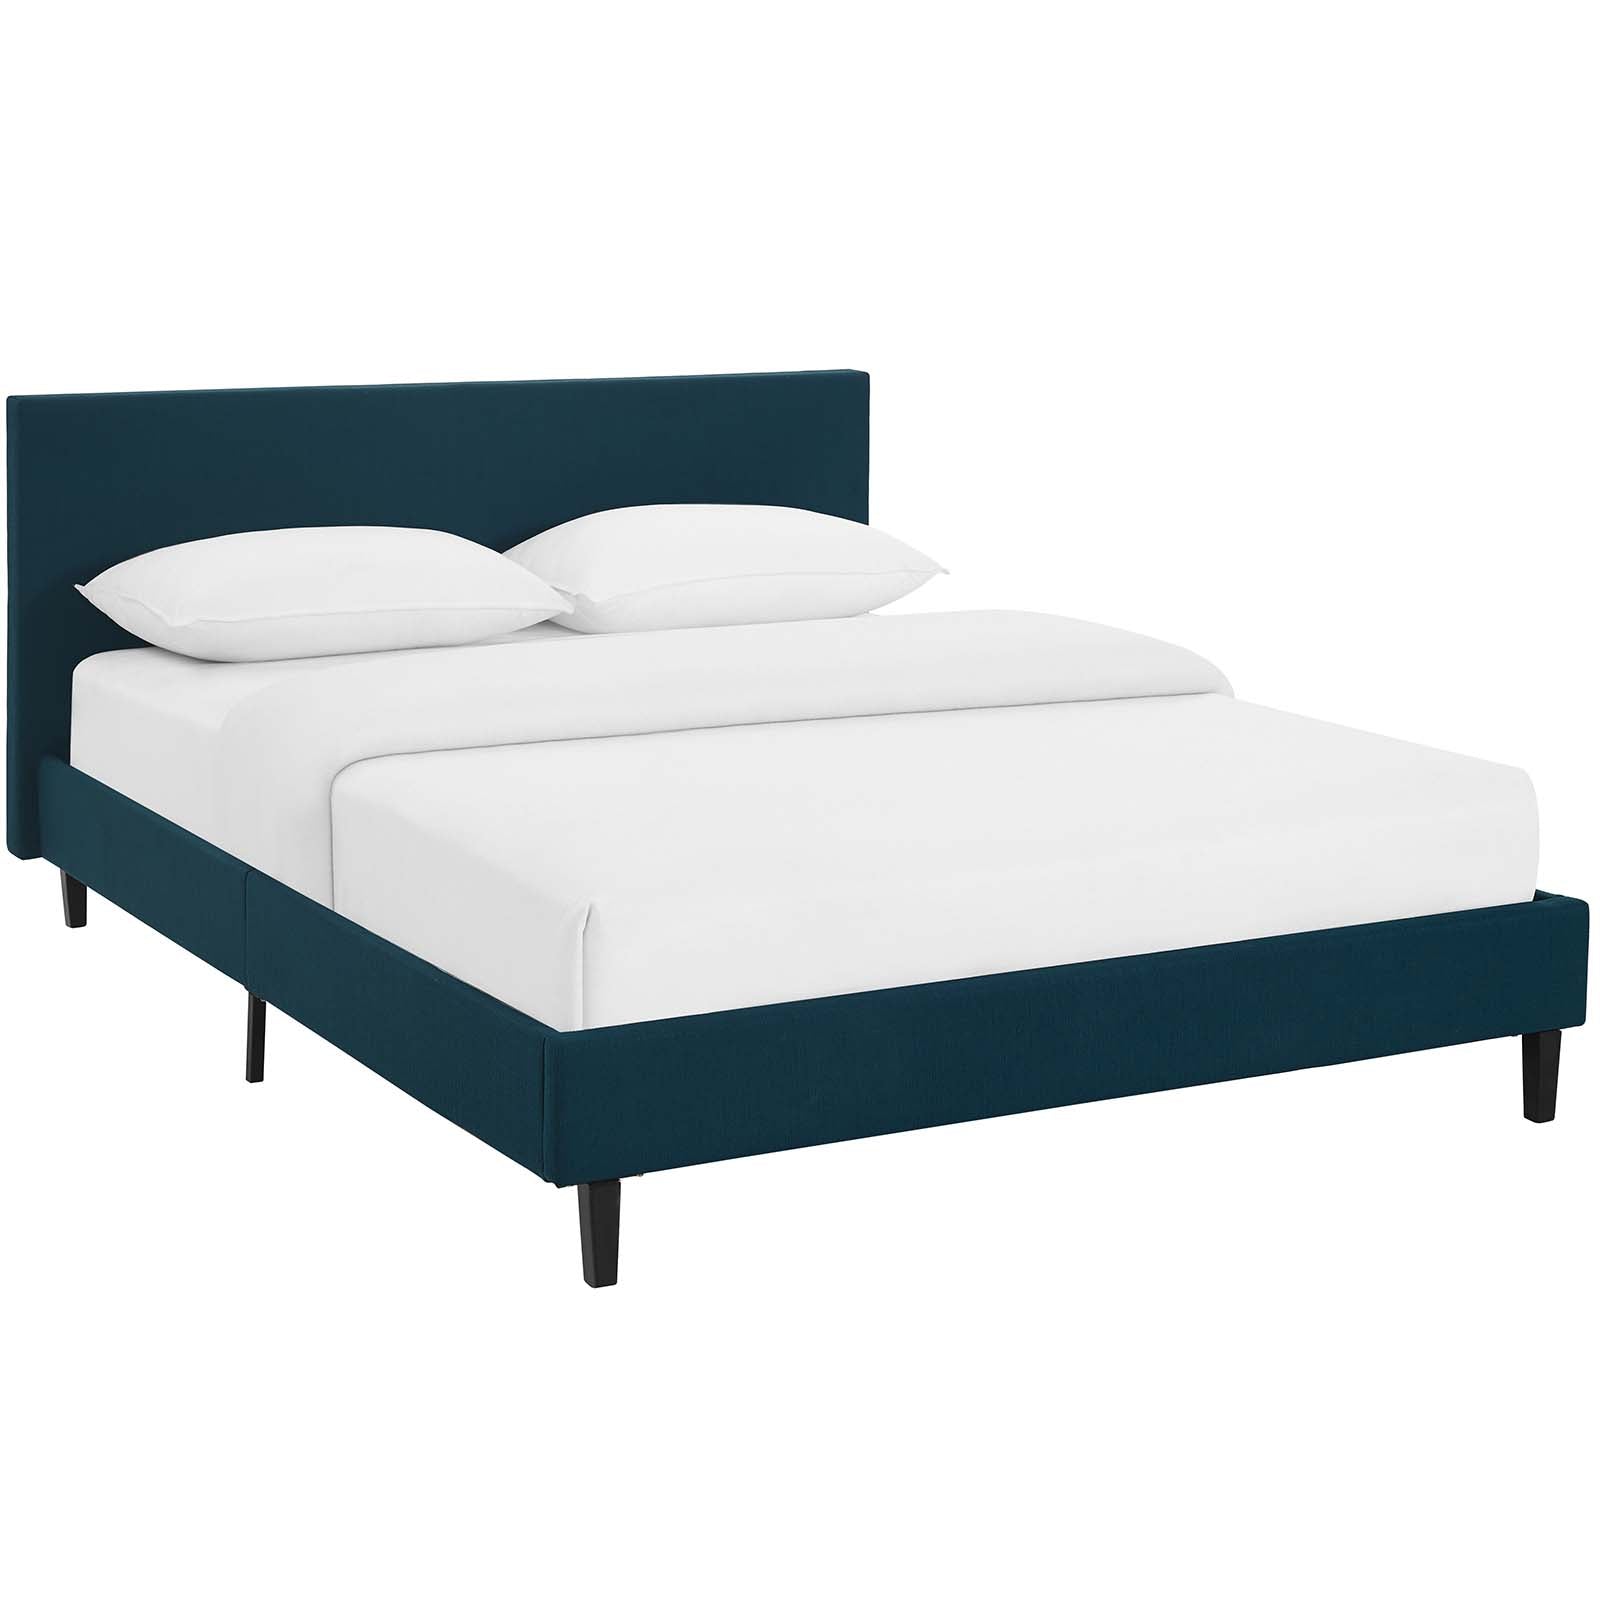 Modway Beds - Anya Queen Bed Azure